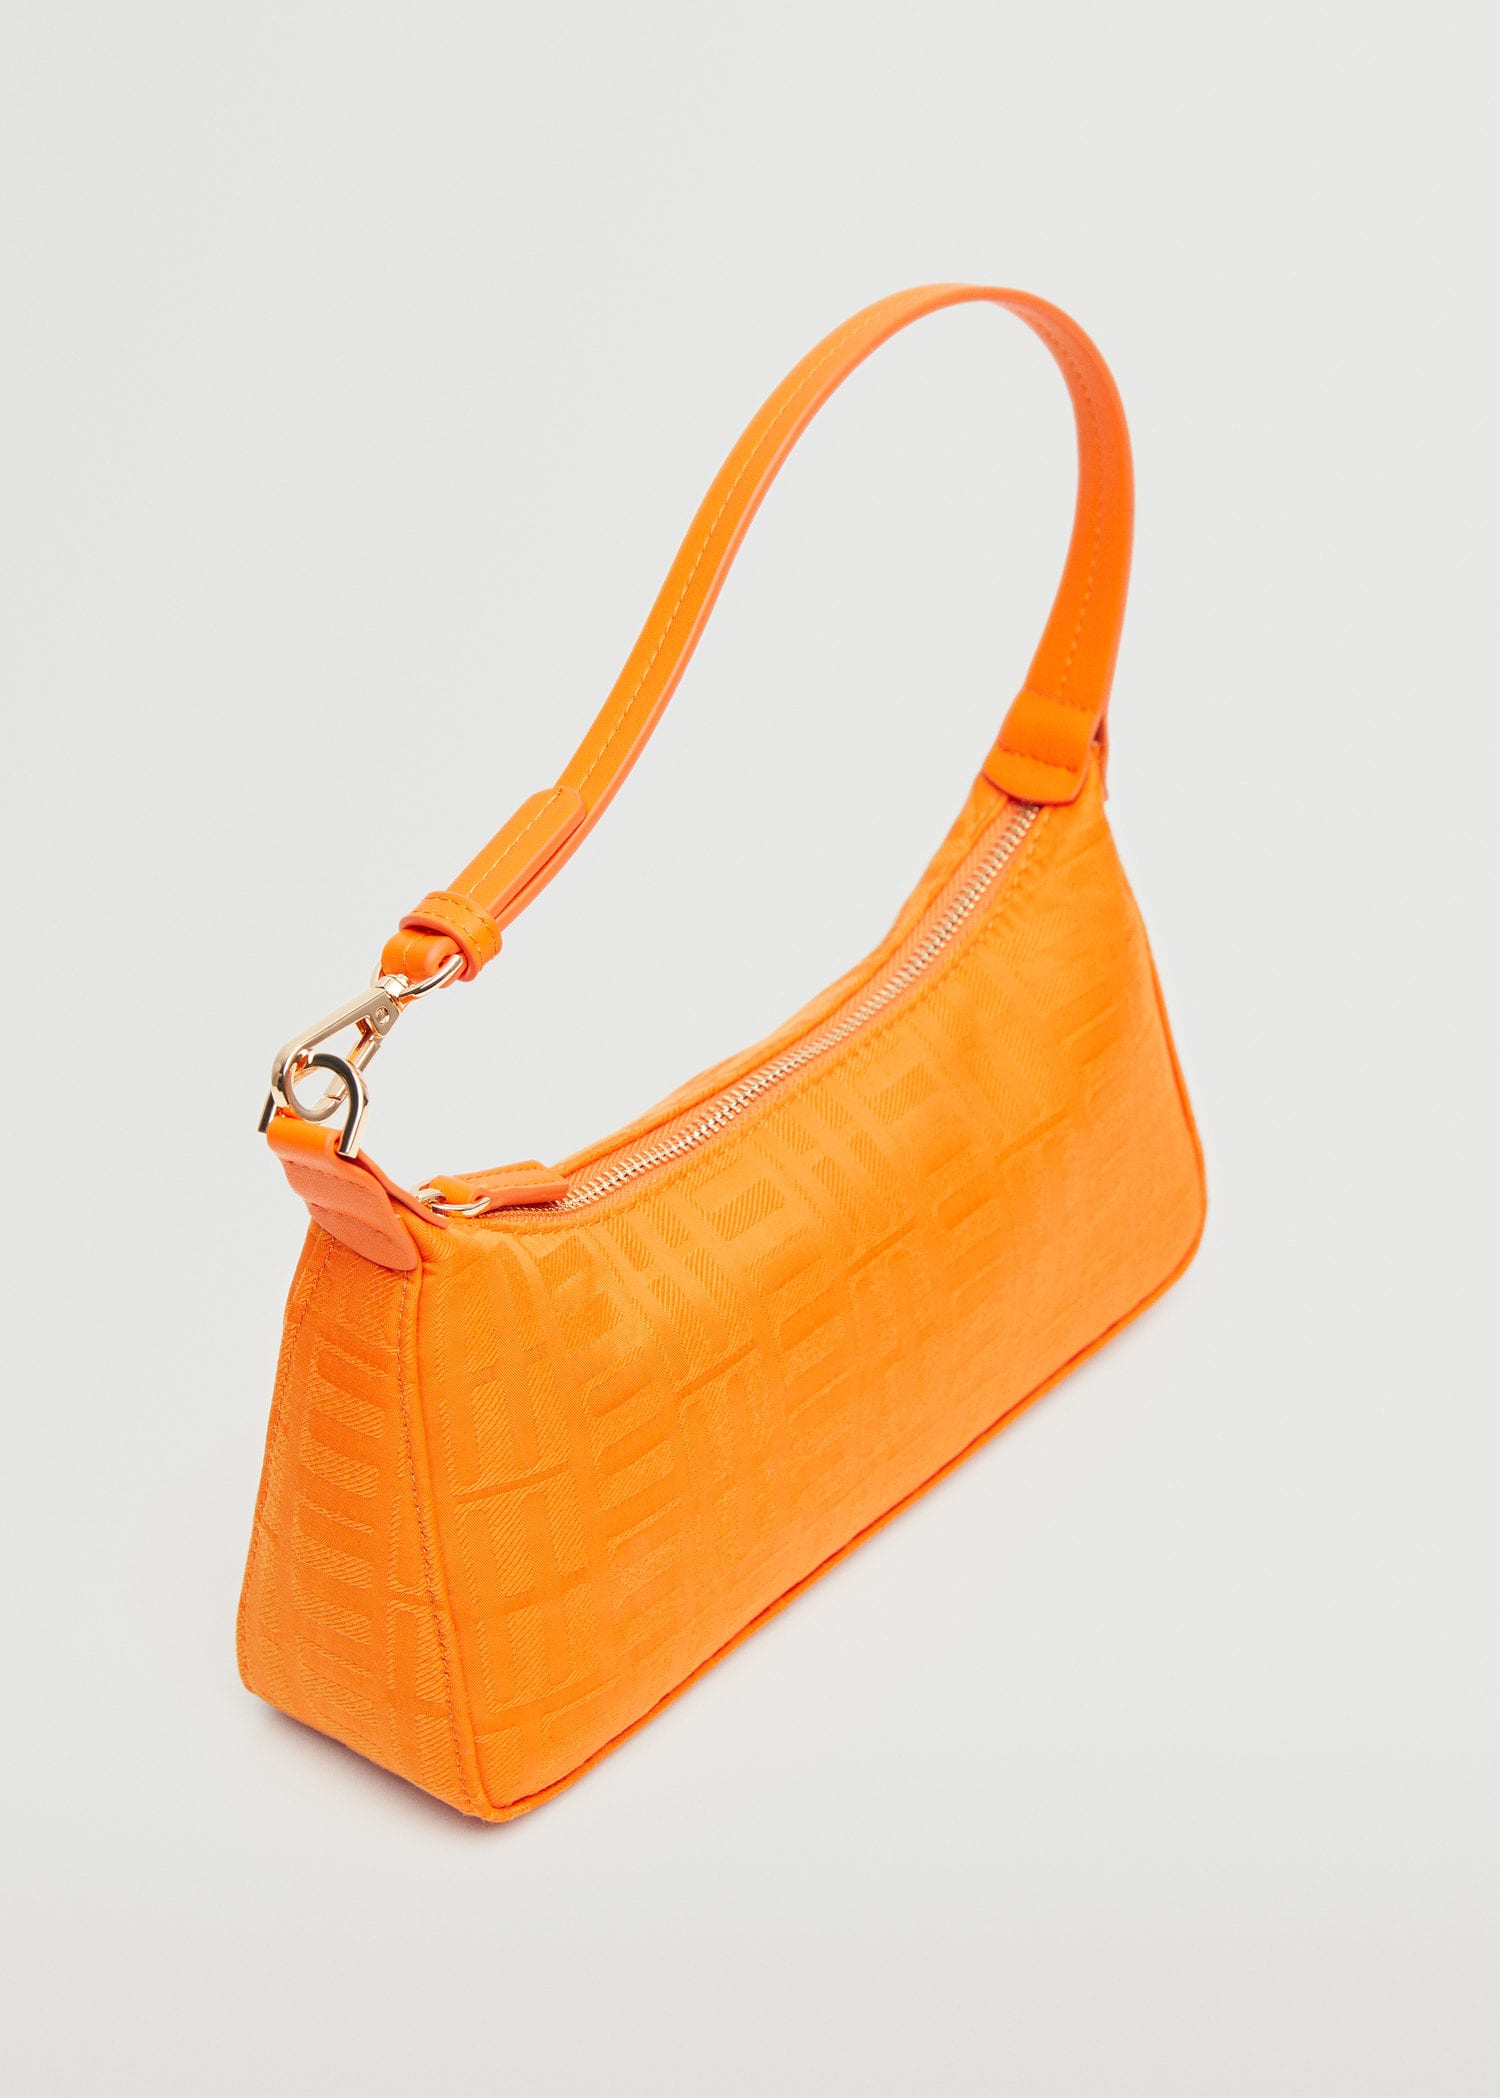 Our best seller: the 90s Mini Baguette Handbag. – The Smart Minimalist